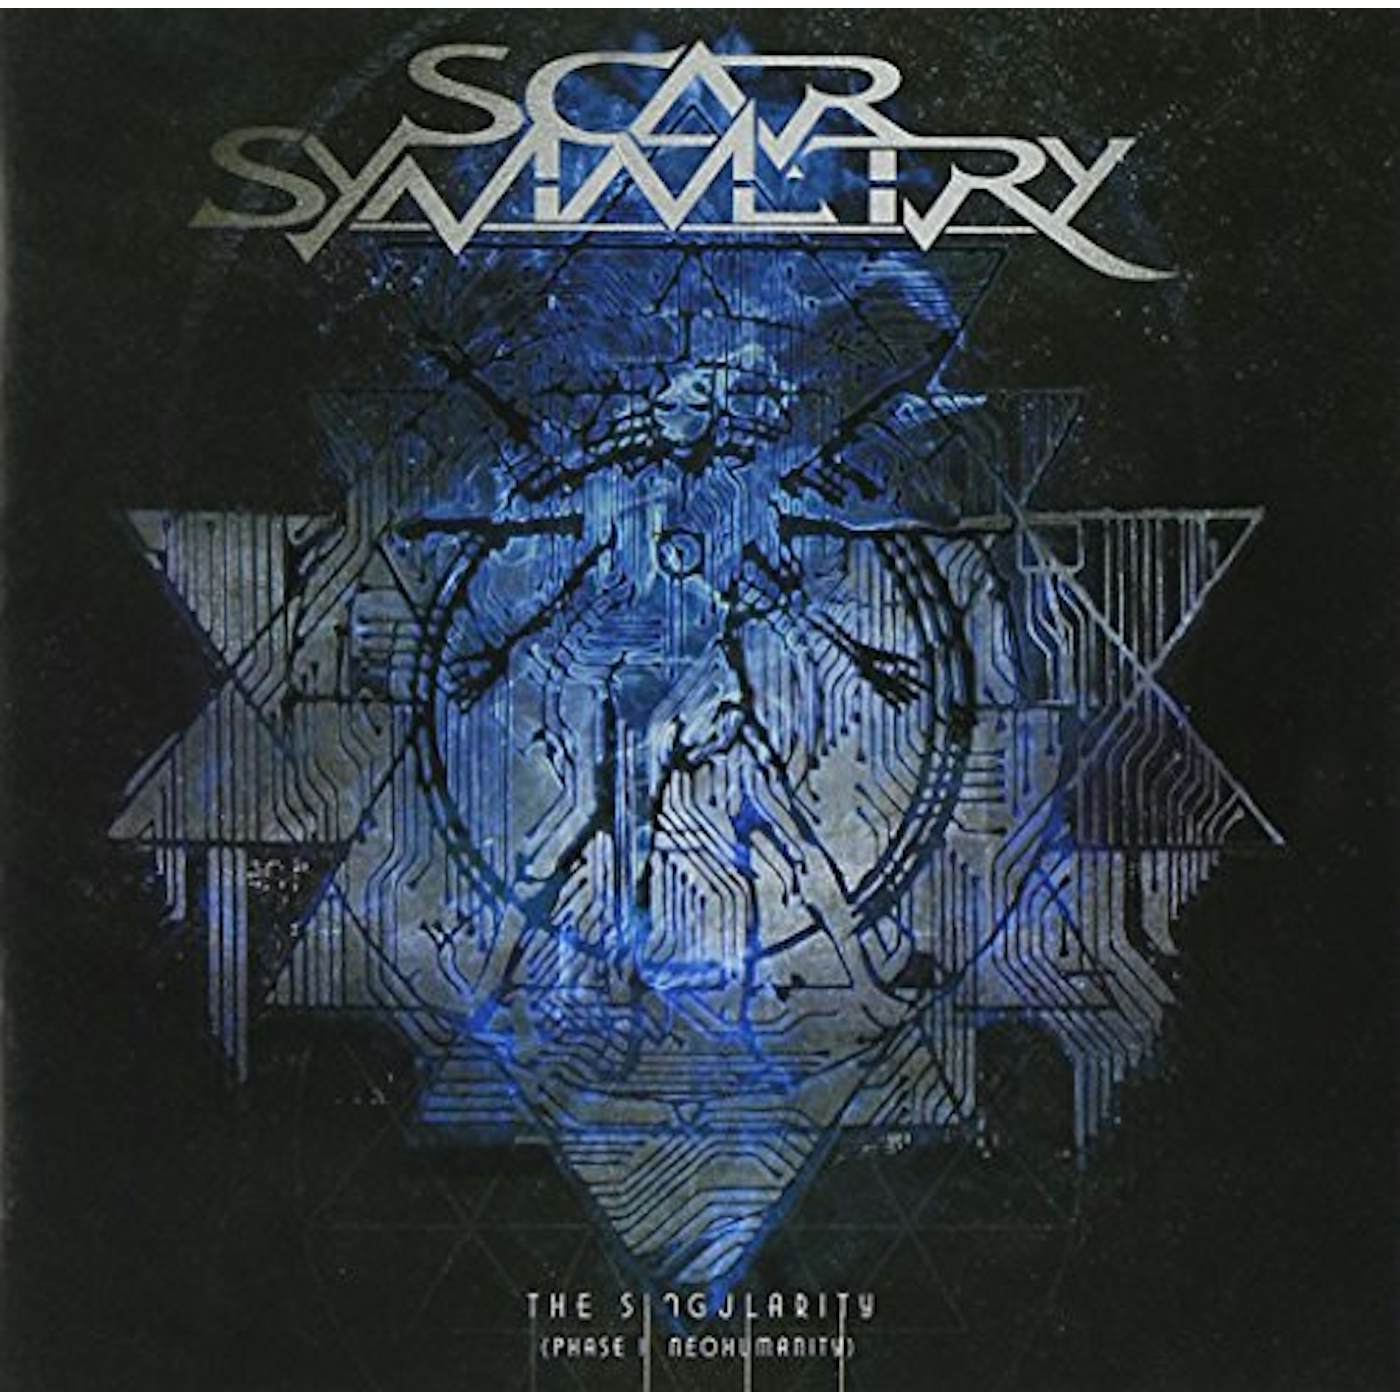 Scar Symmetry SINGULARITY PHASE 1: NEOHUMANITY CD